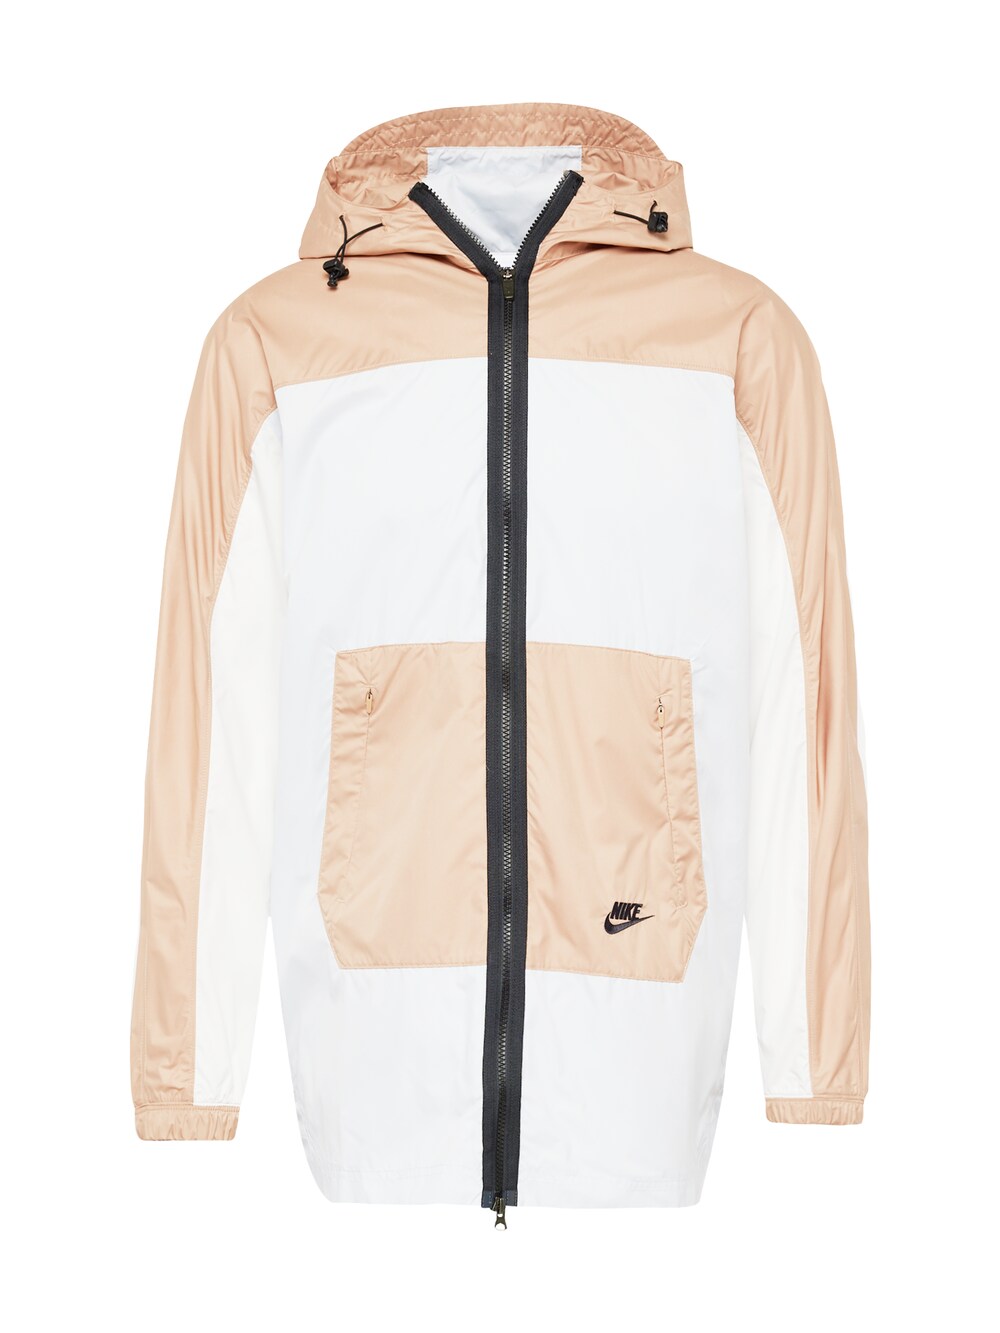 Межсезонная куртка Nike Sportswear, светло-коричневый межсезонная куртка nike белый